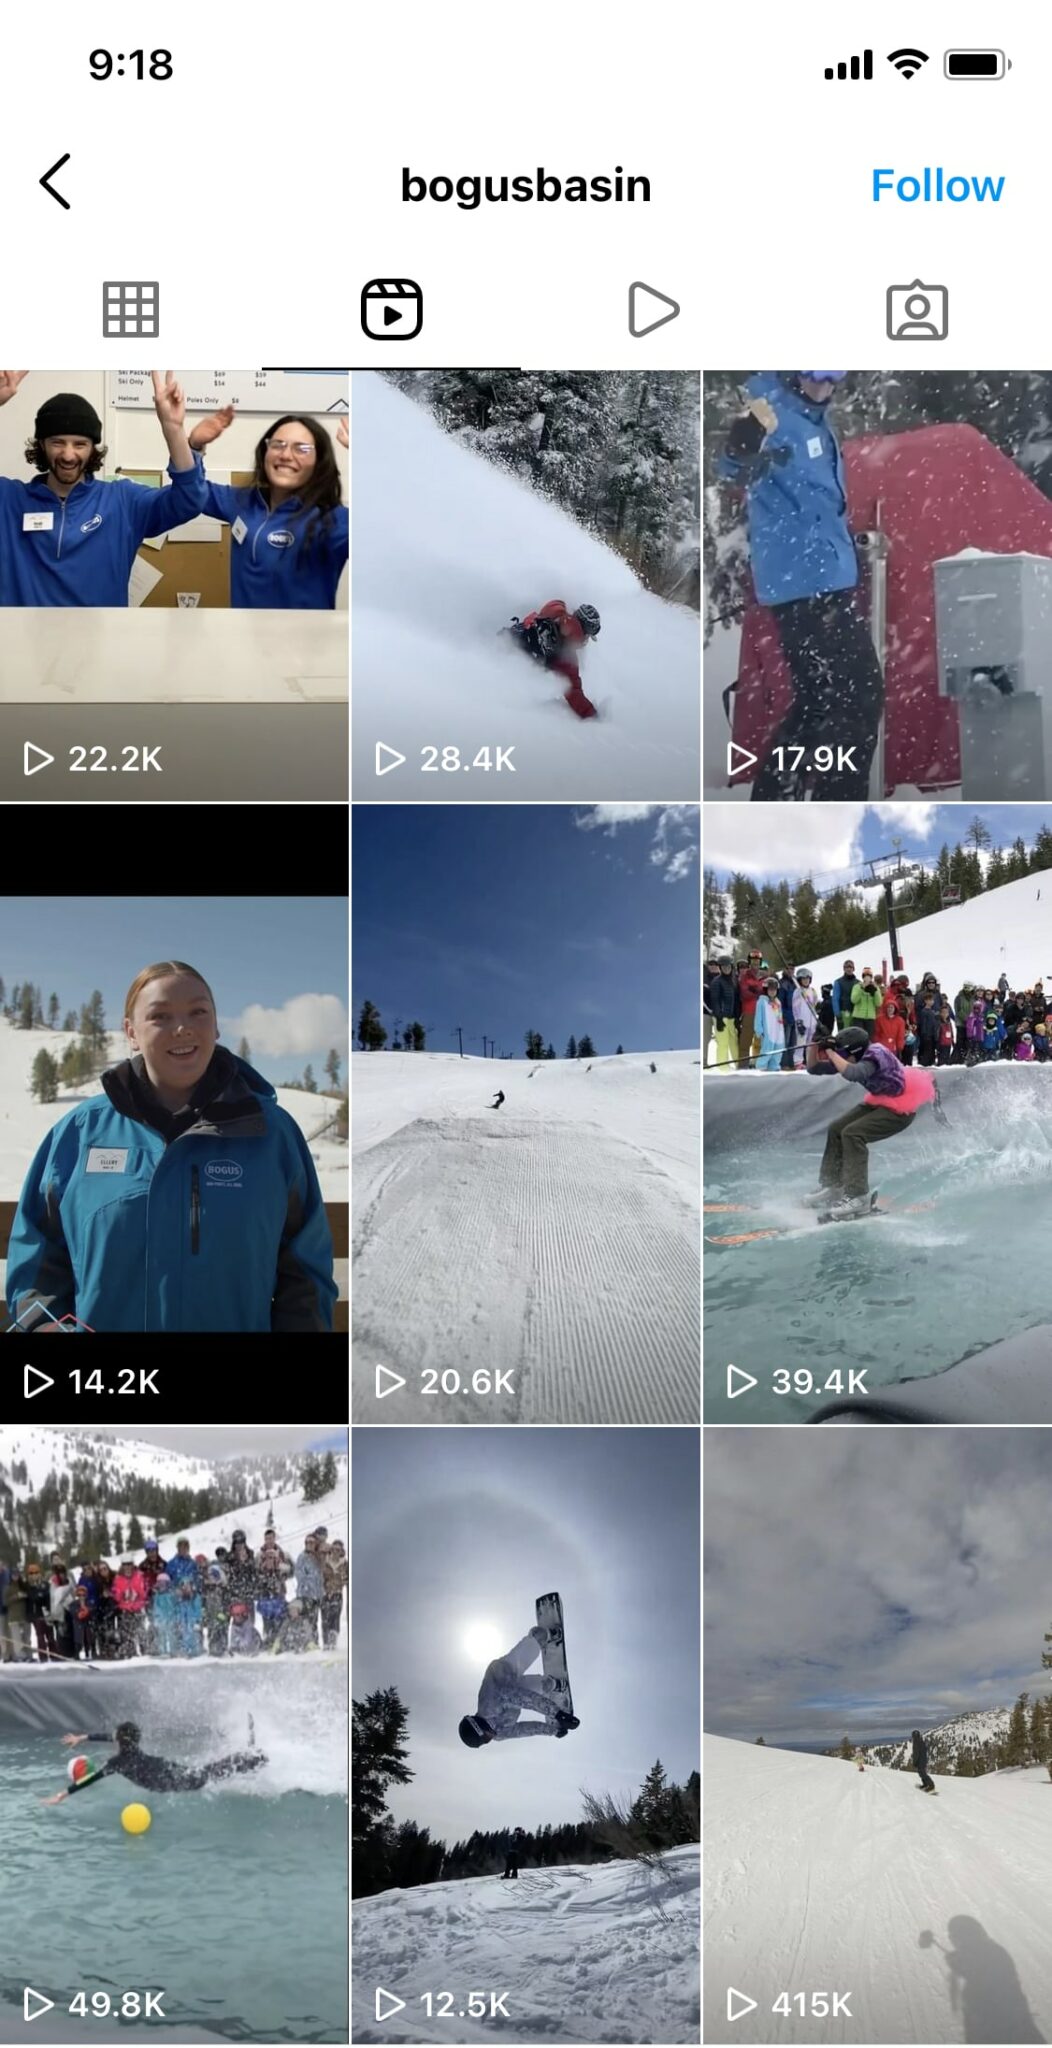 Bogus Basin ski resort Instagram reels